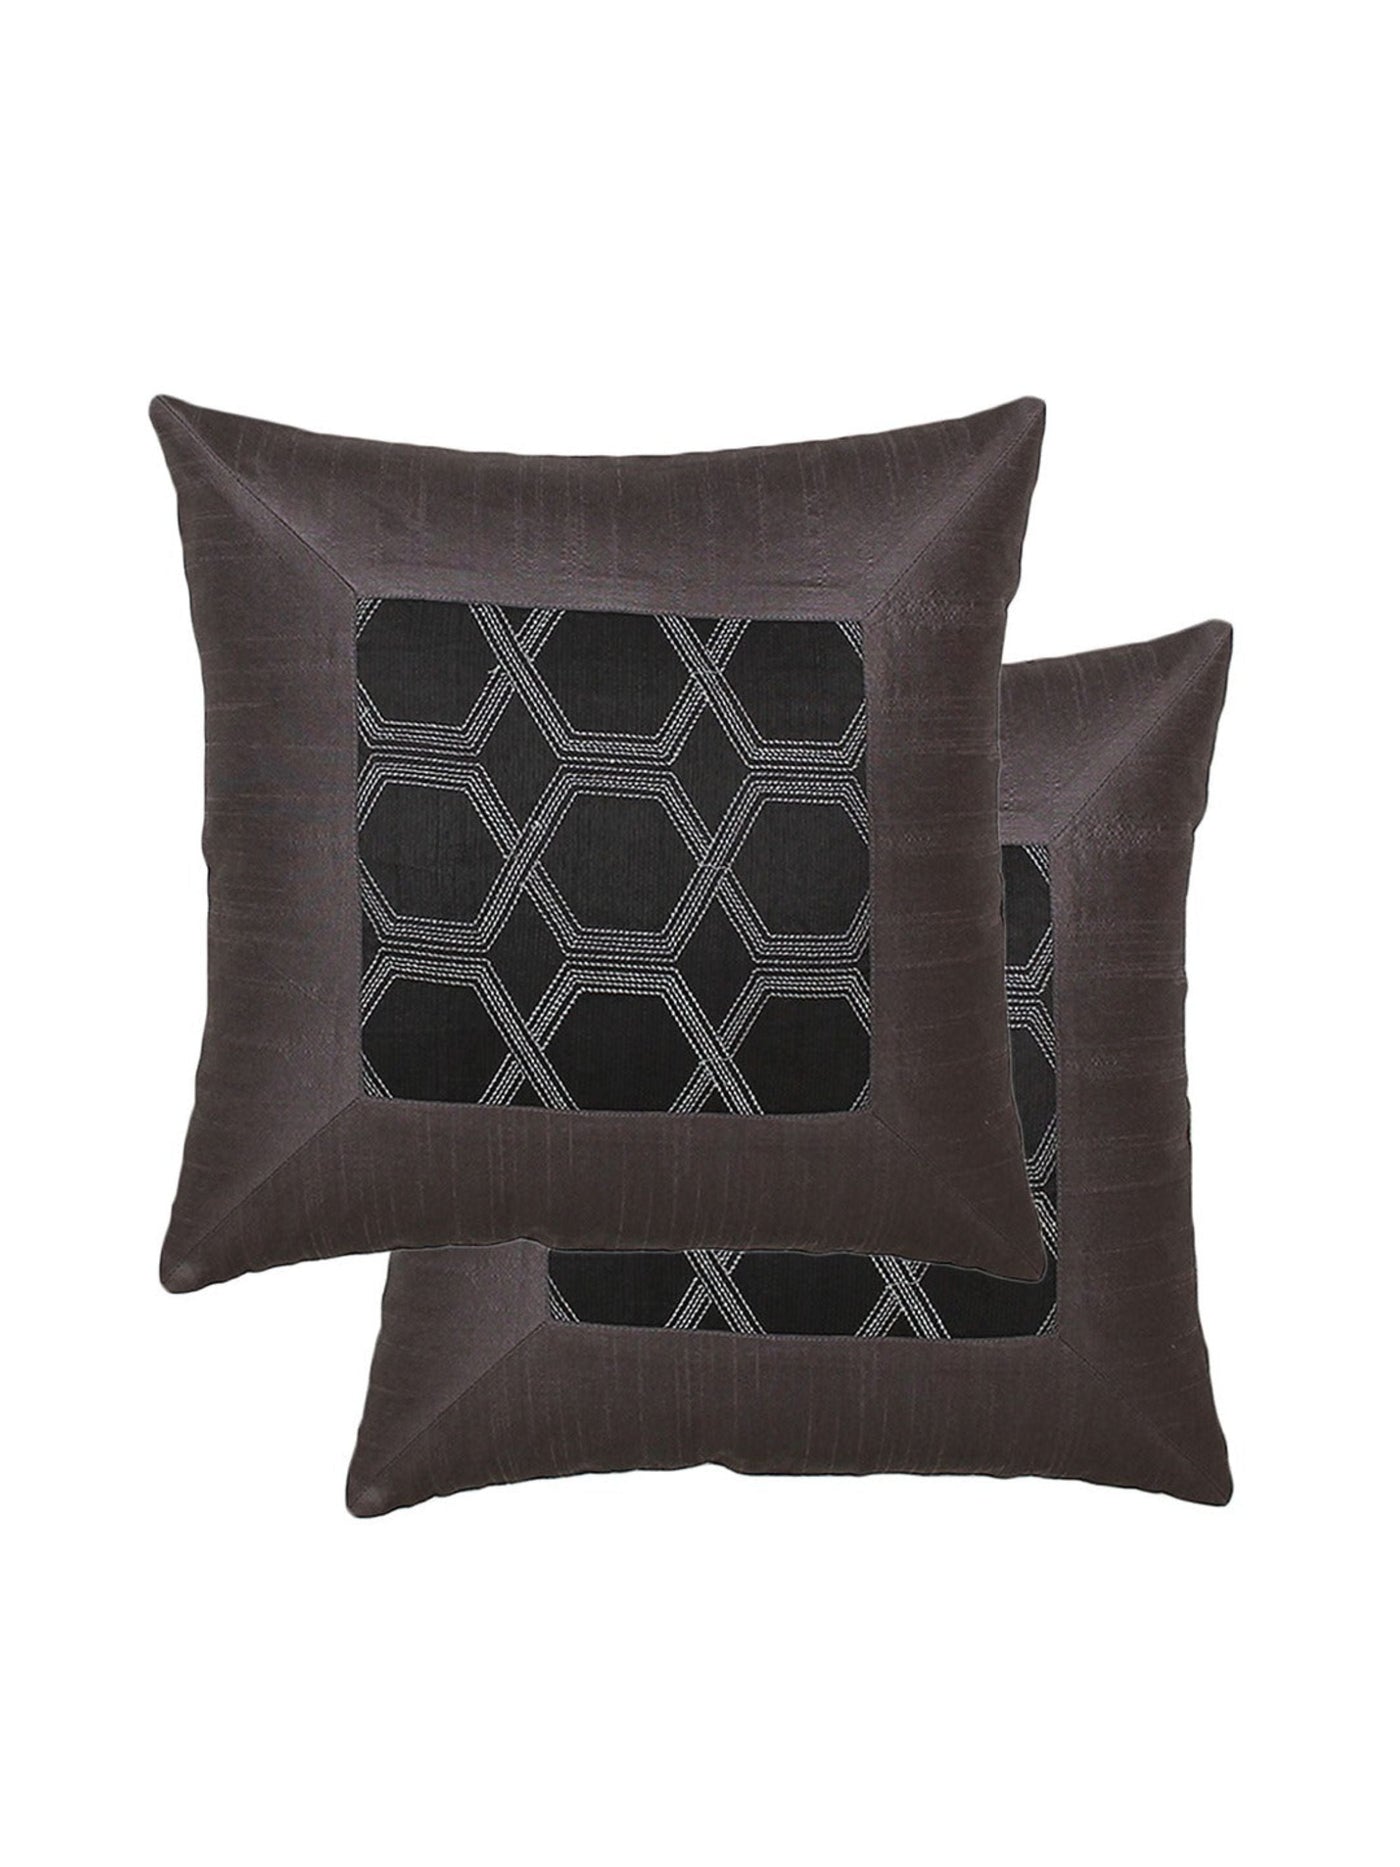 2 Cushion Covers-8903773000708